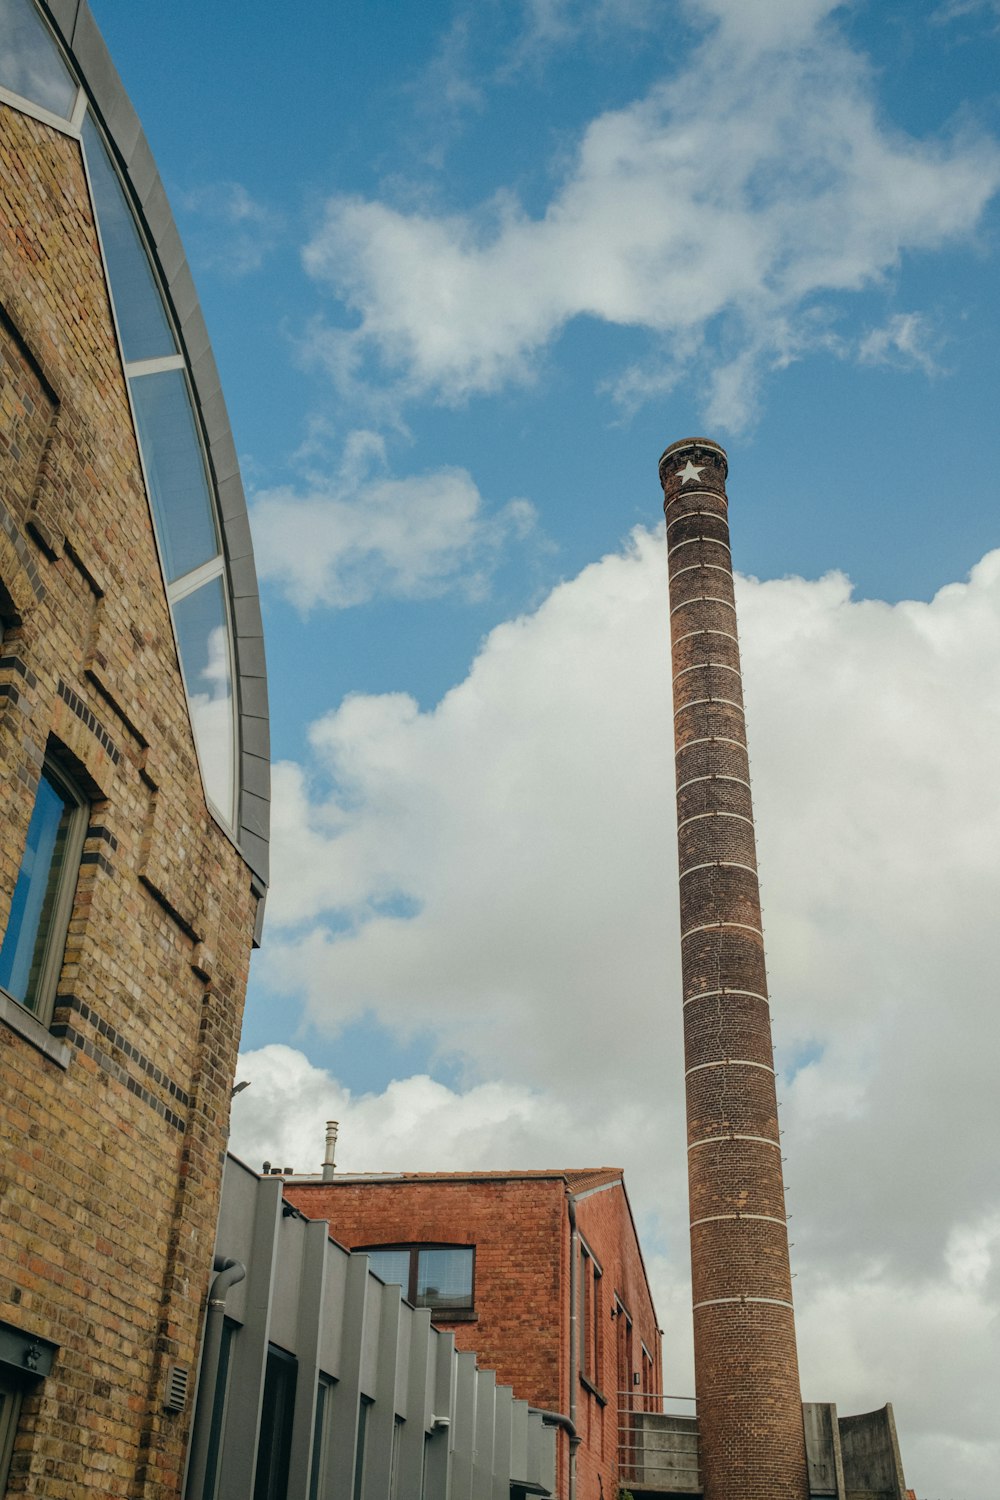 a tall brick chimney next to a brick building